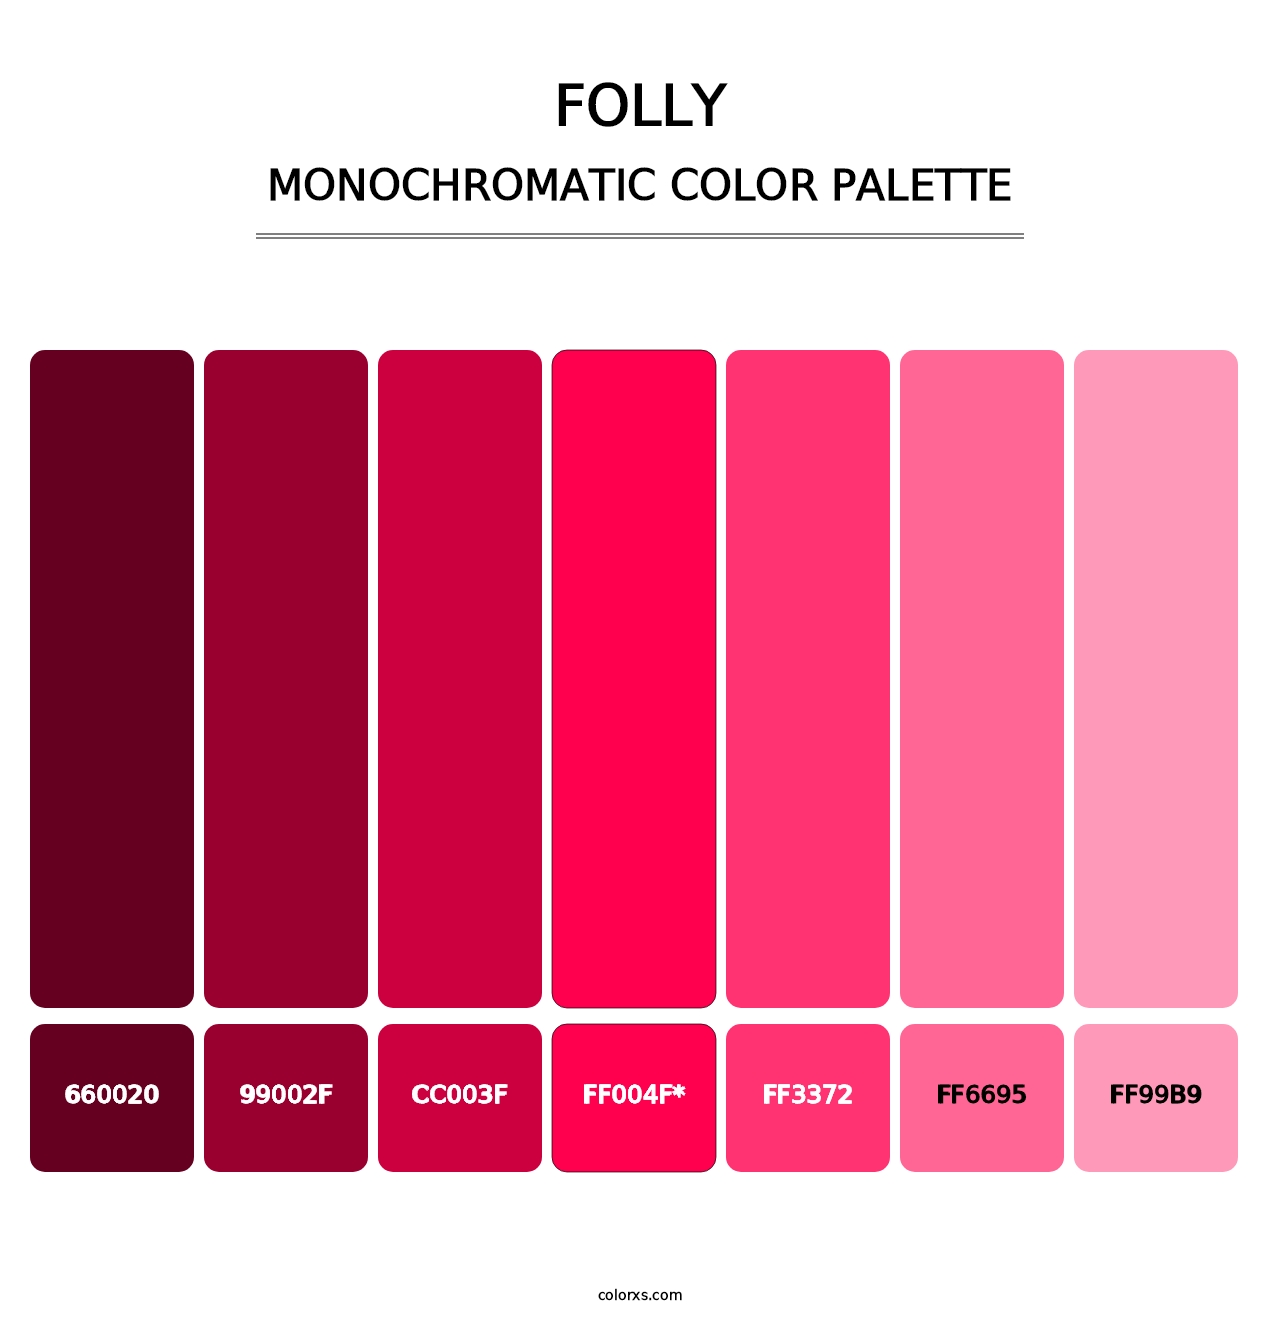 Folly - Monochromatic Color Palette